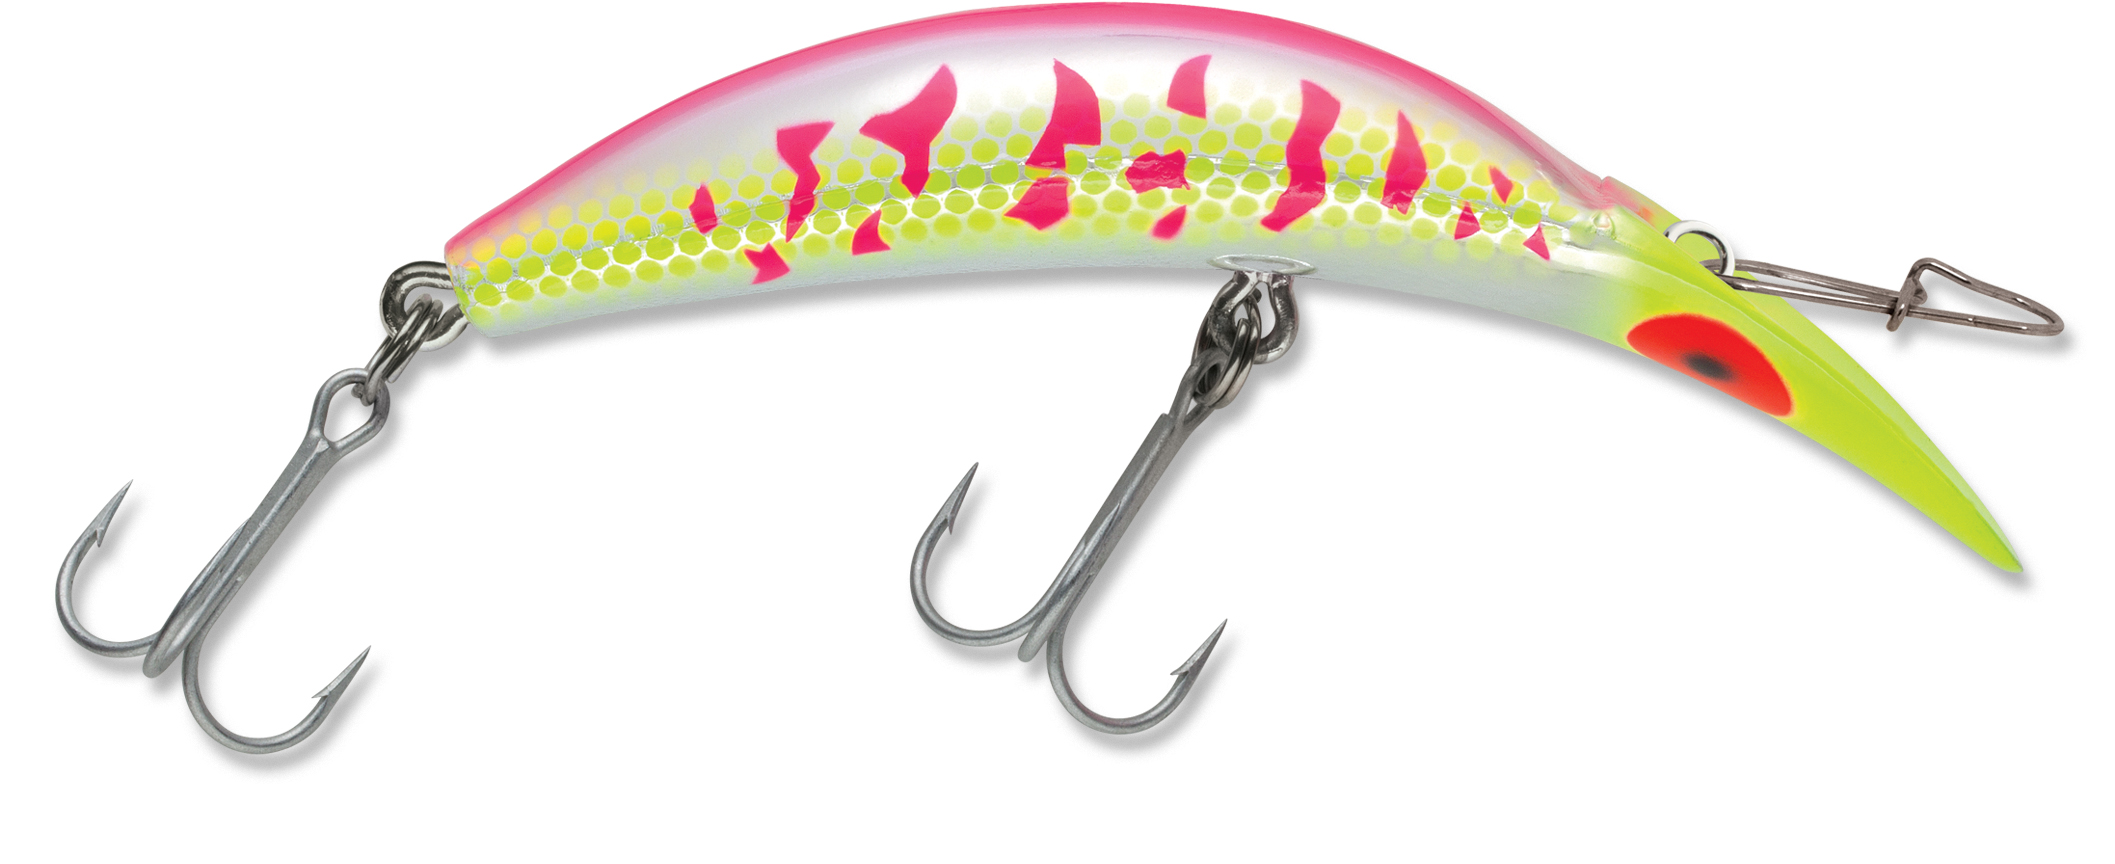 Storm Original Hot 'N Tot #05 - Pink Lip with Metallic Blue Glitter -  Precision Fishing